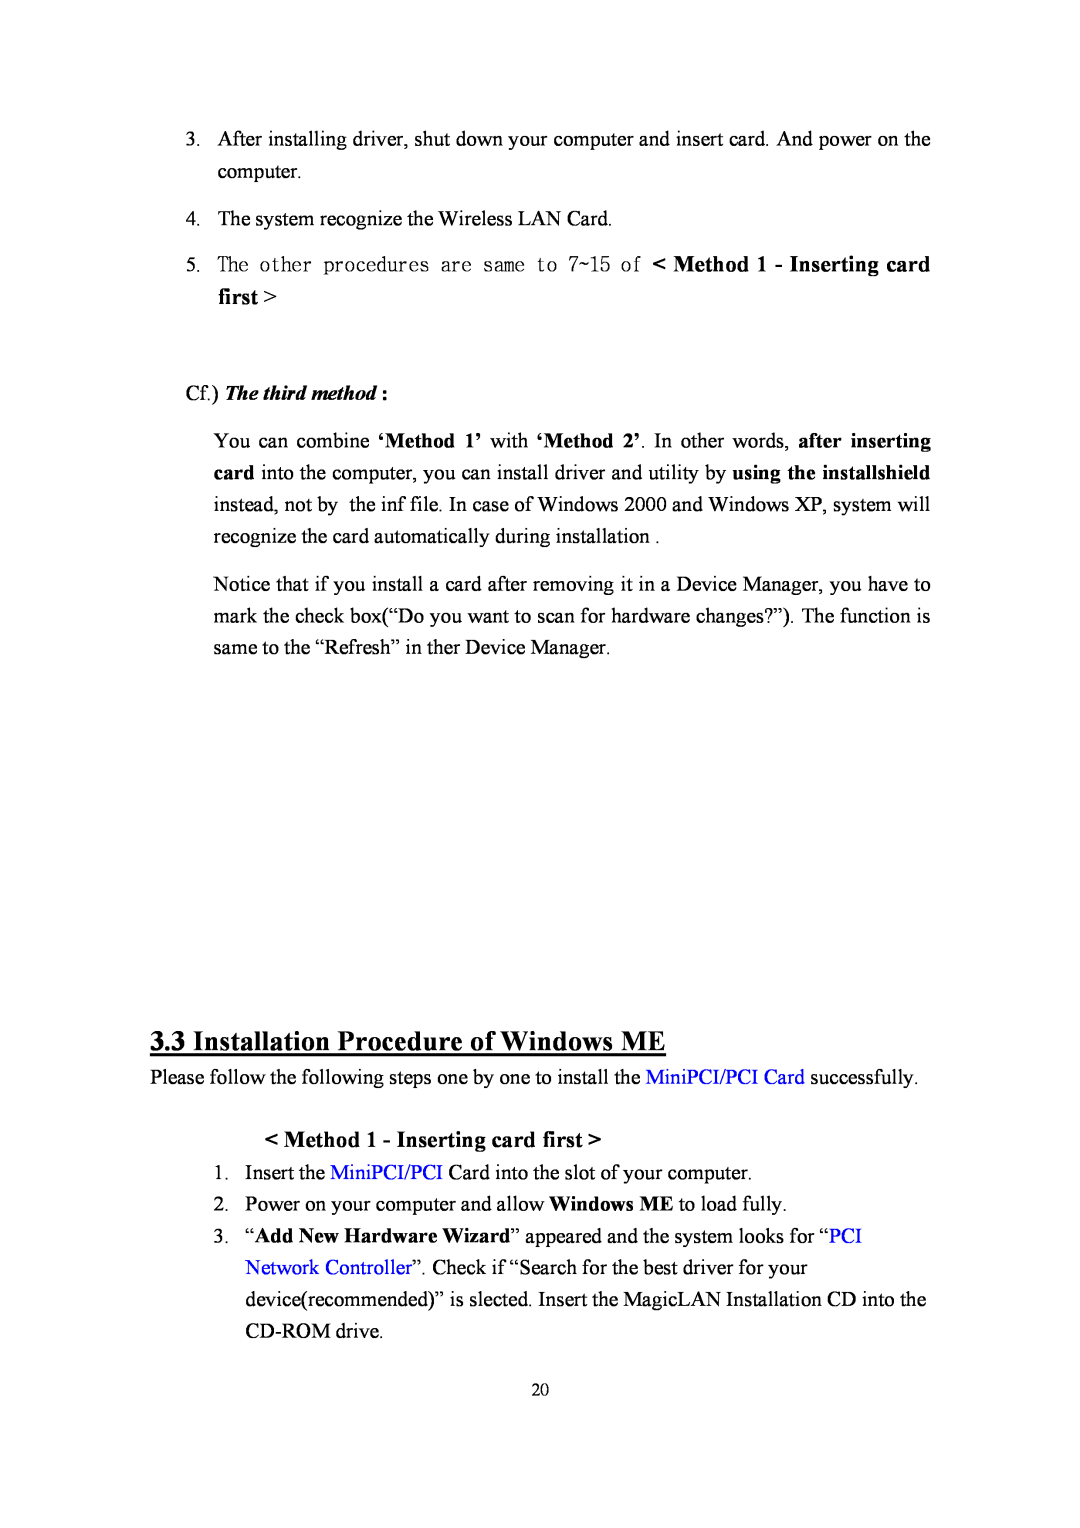 Samsung SWL-2210M, SWL-2210P Installation Procedure of Windows ME, Cf. The third method, Method 1 - Inserting card first 